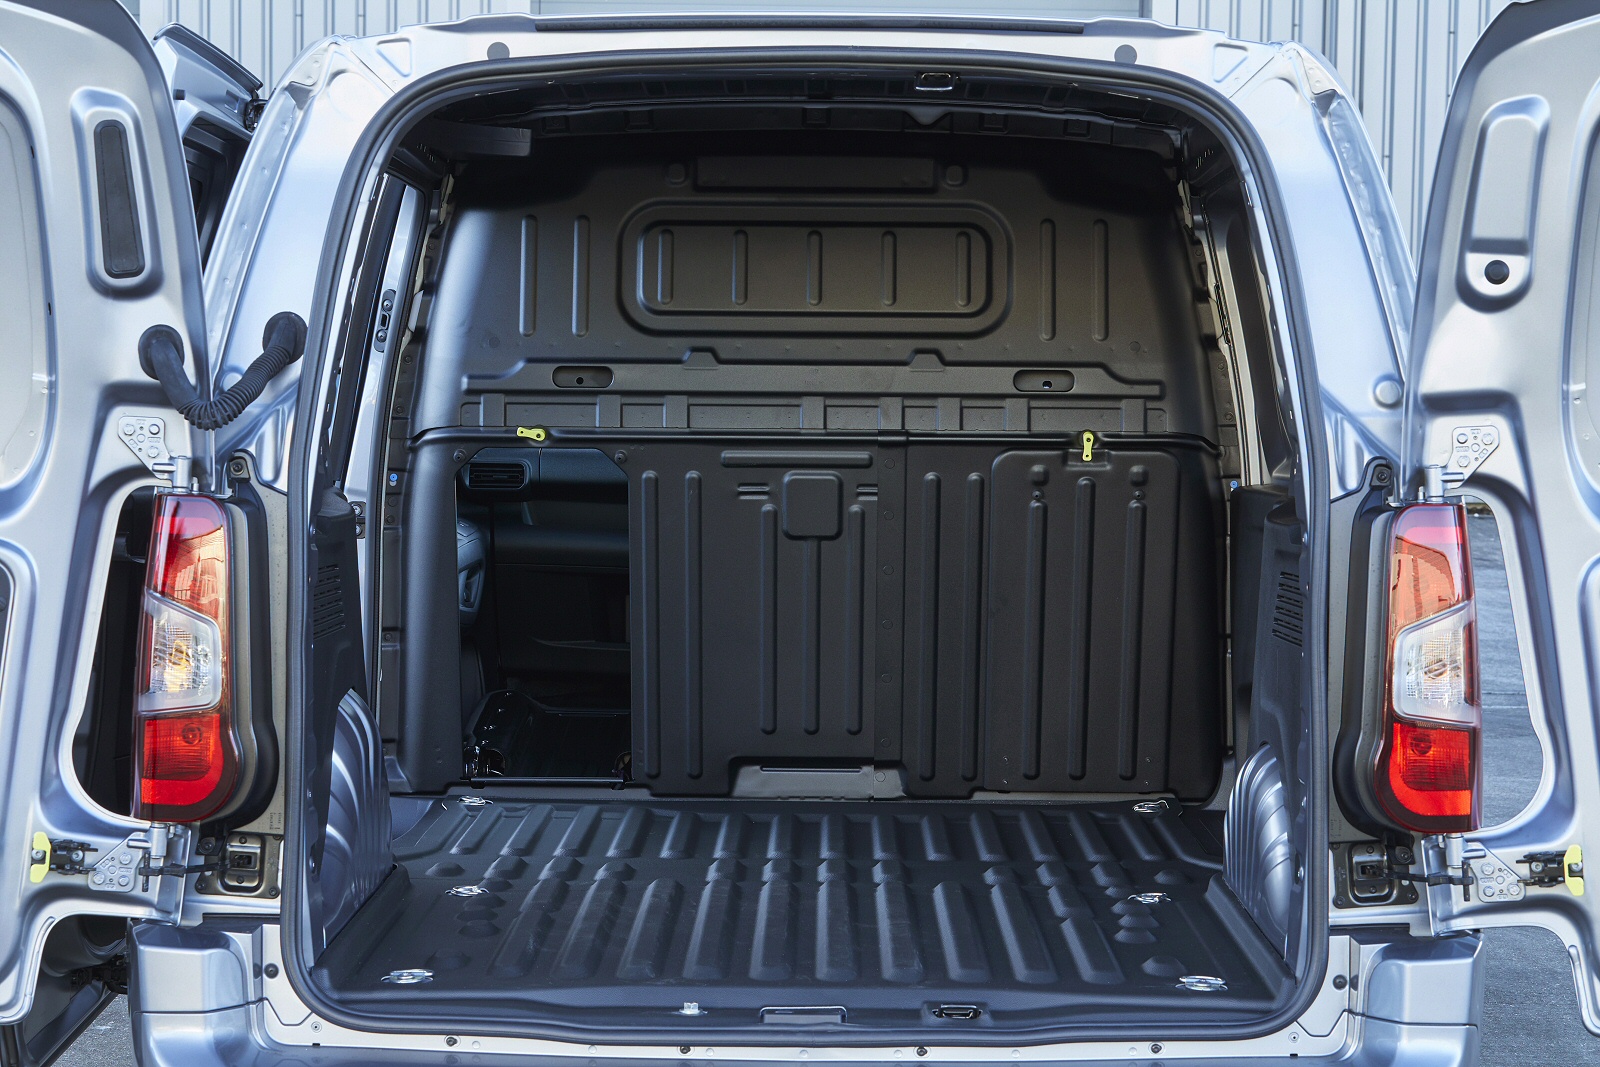 PEUGEOT e-PARTNER STANDARD 800 100kW 50kWh Asphalt Premium + Van Auto